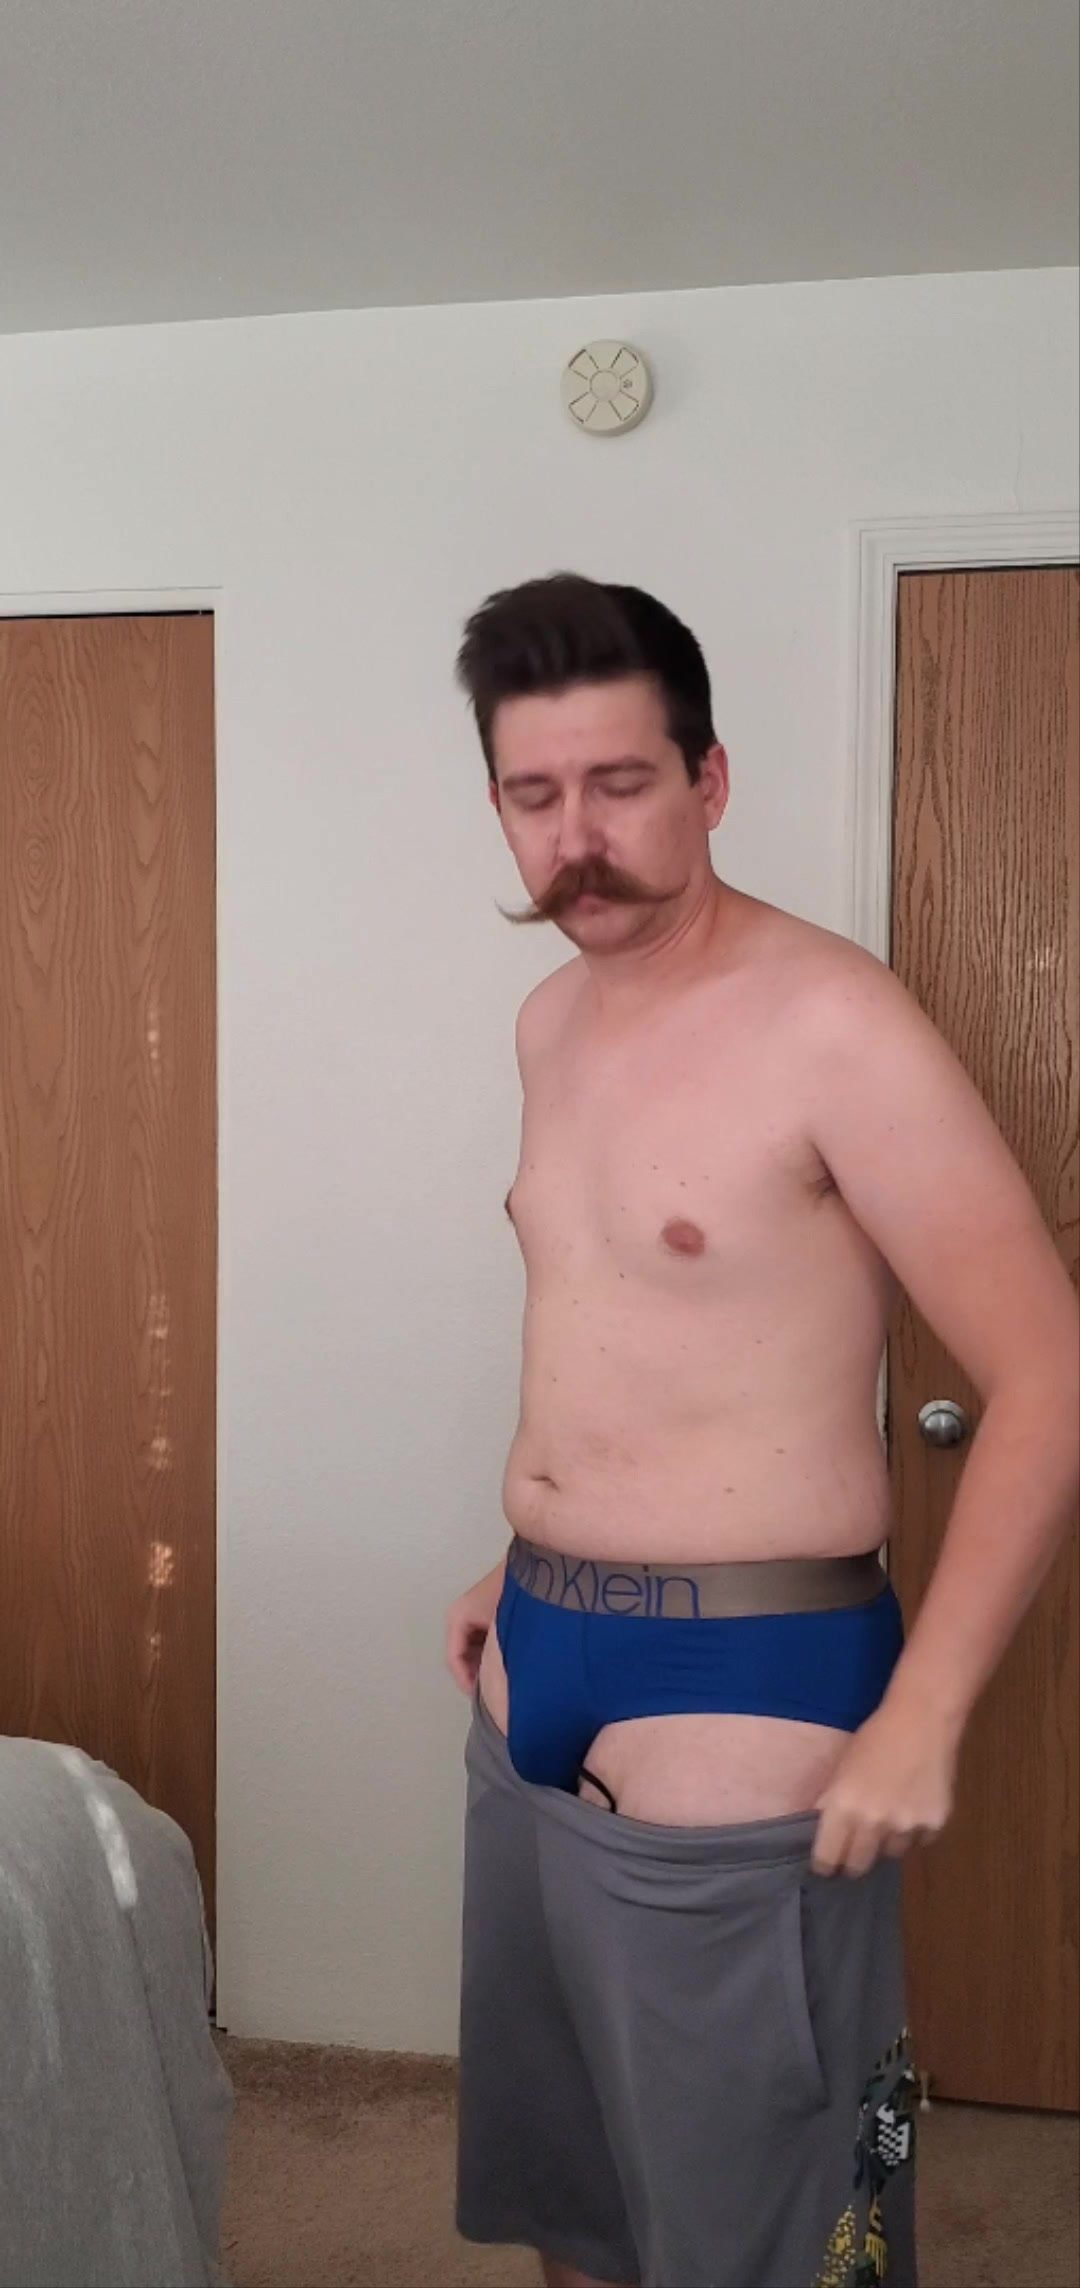 Male nude life model mustache faggot strips… ThisVid image